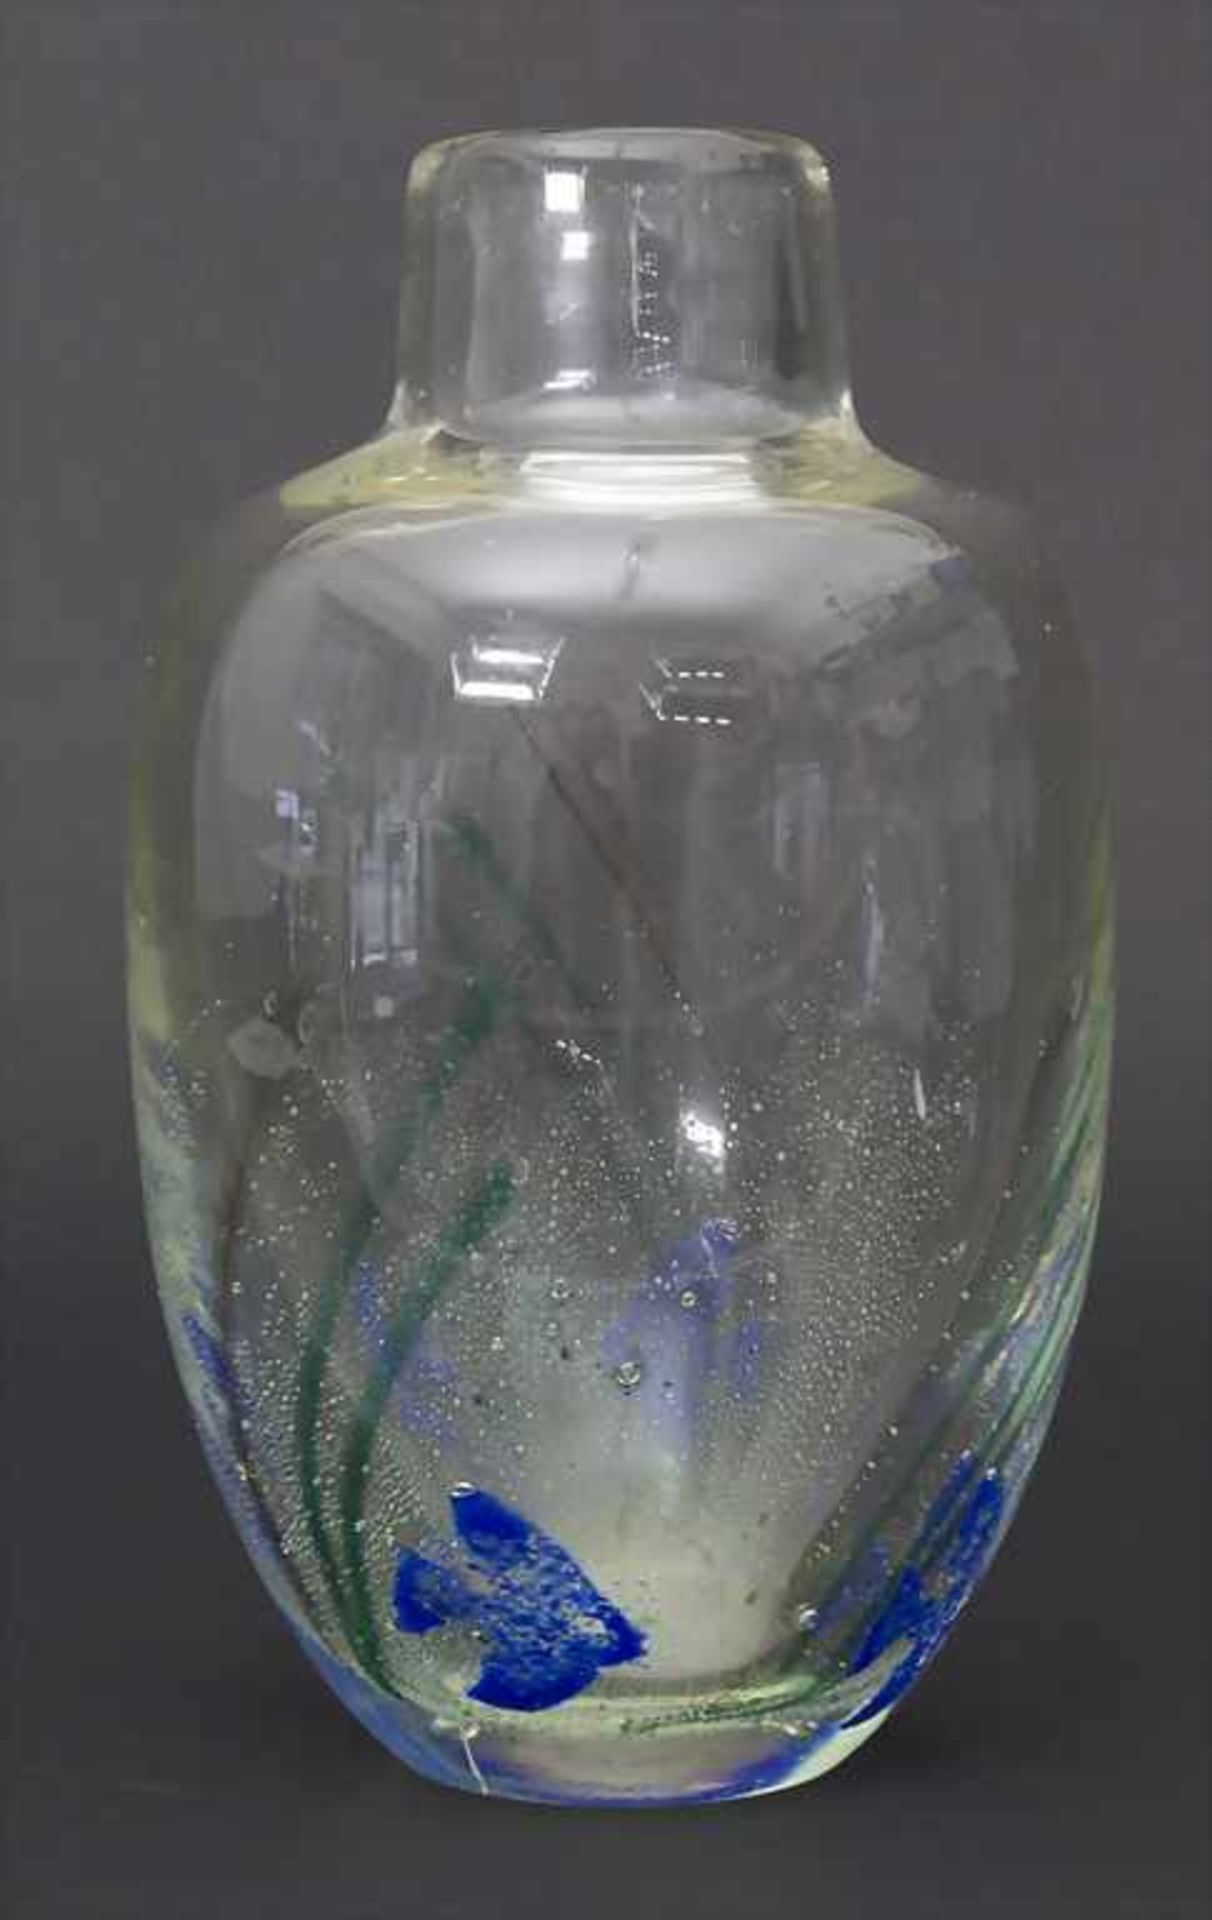 Ziervase / A decorative vase, Skandinavien, 50/60er JahreMaterial/Technik: farbloses Glas, im - Image 2 of 5